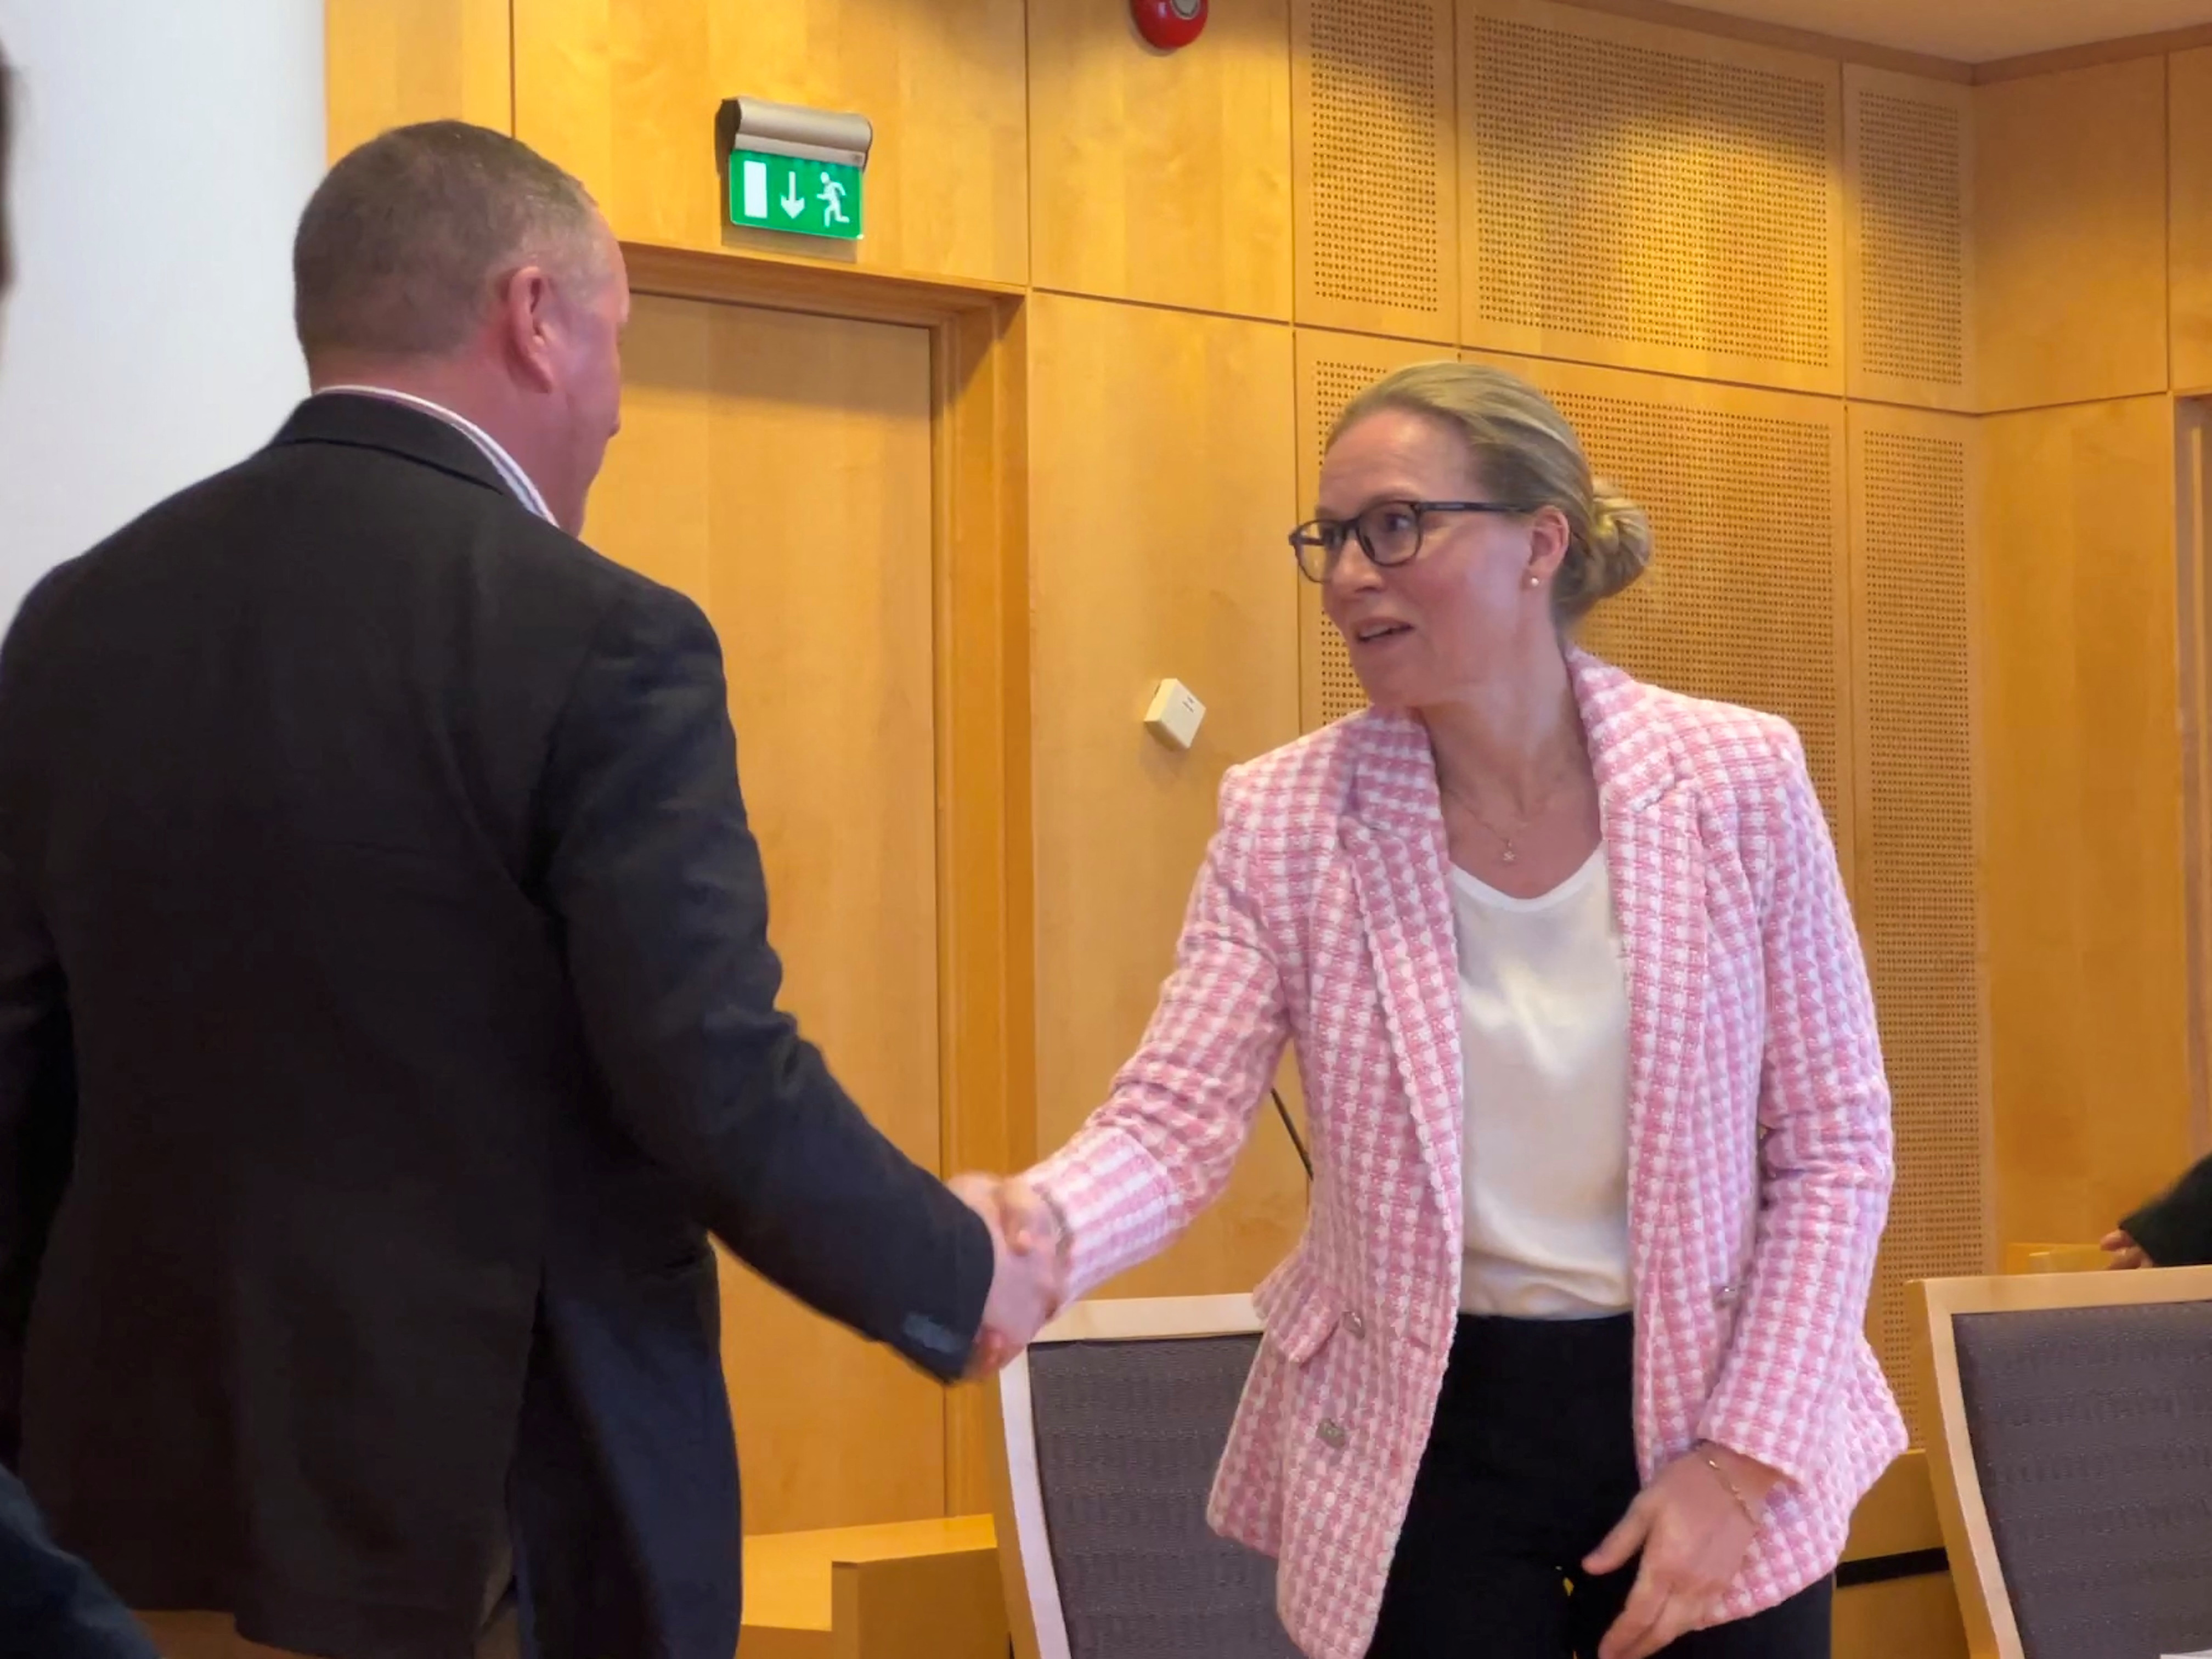 Norway wealth fund CEO Nicolai Tangen and fund employee Elisabeth Bull Daae meet in court in Oslo